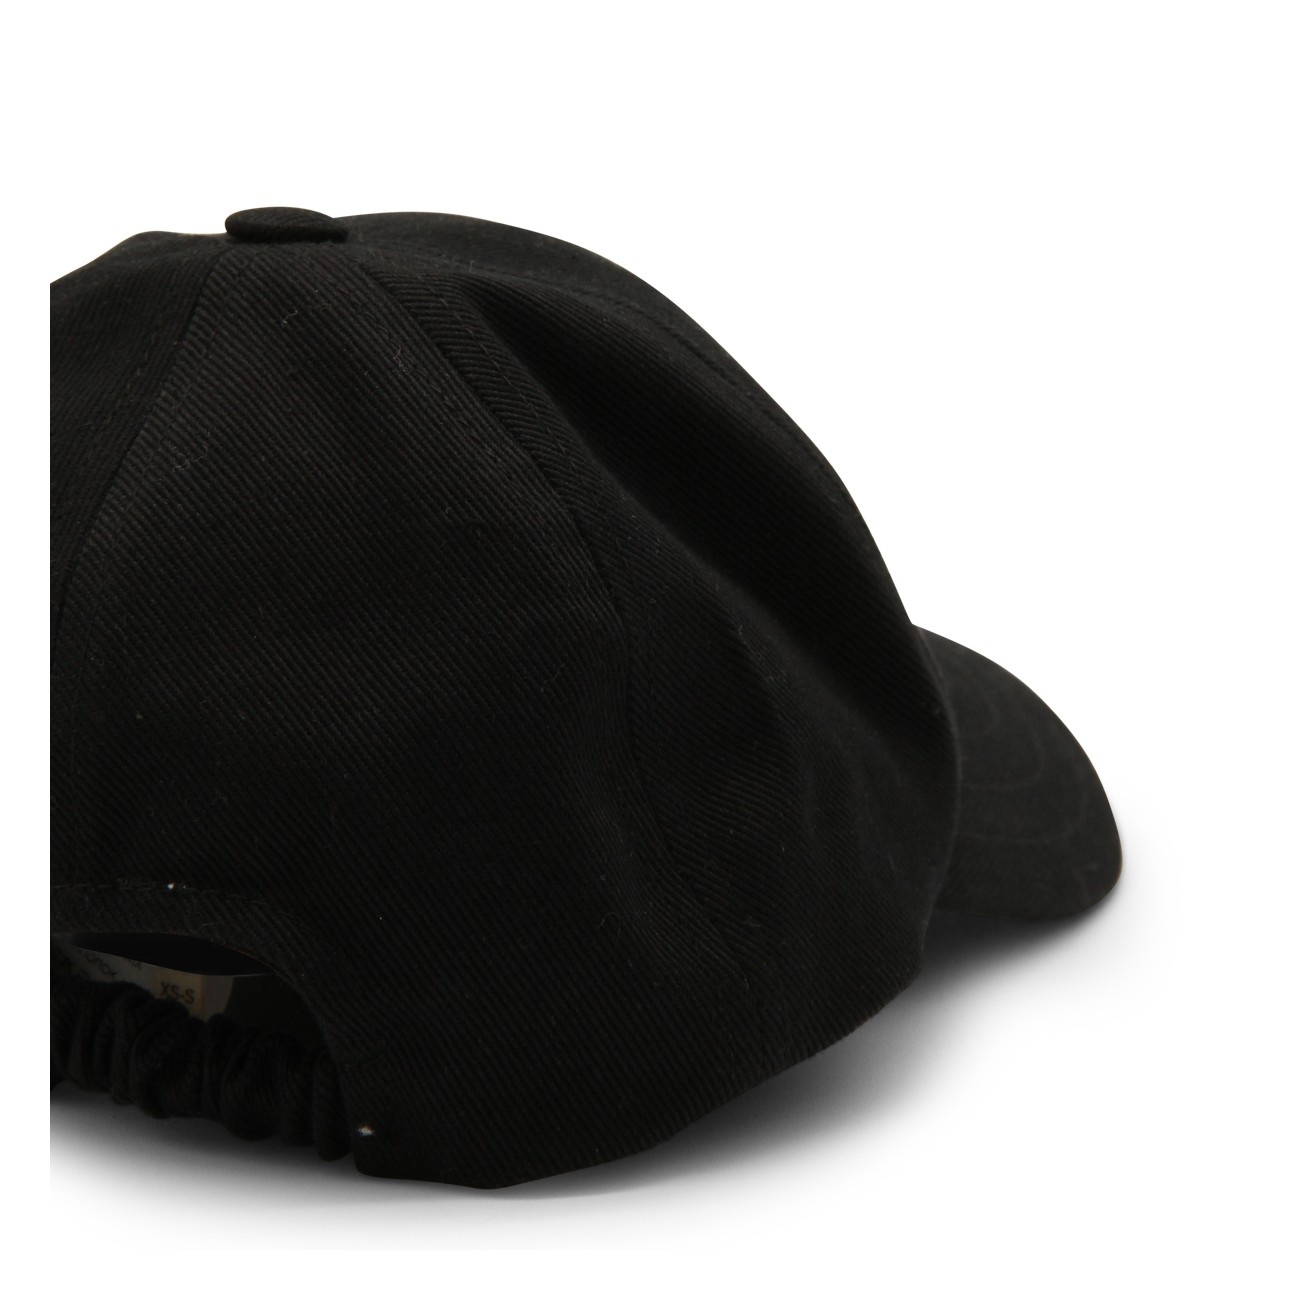 black and white cotton baseball cap - 2